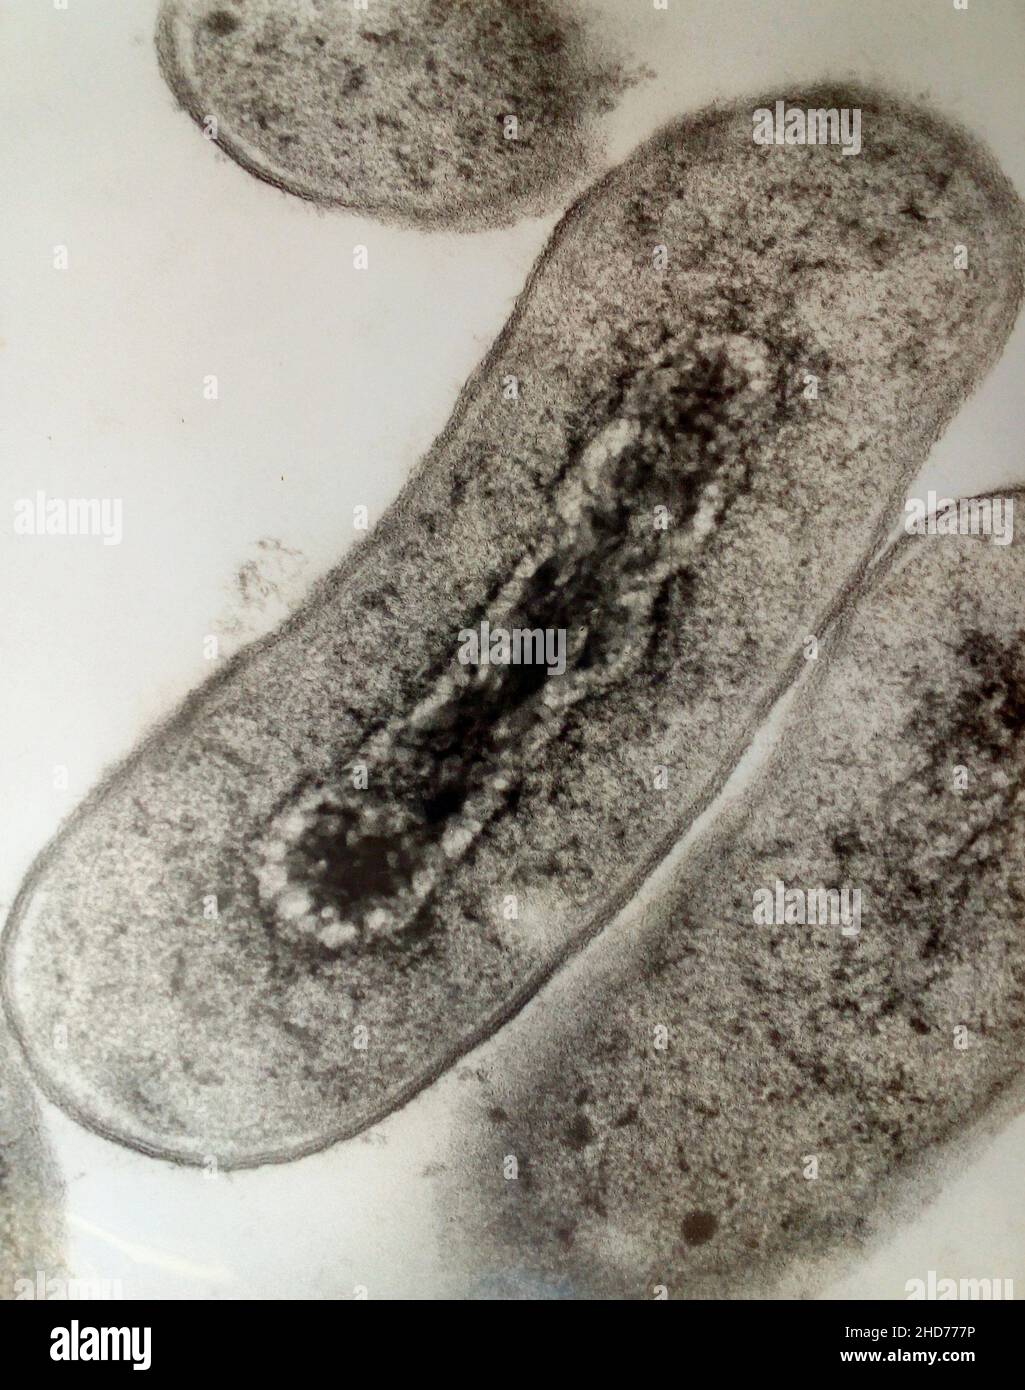 Cross section of Escherichia coli bacteria under transmission electron microscopy. Stock Photo